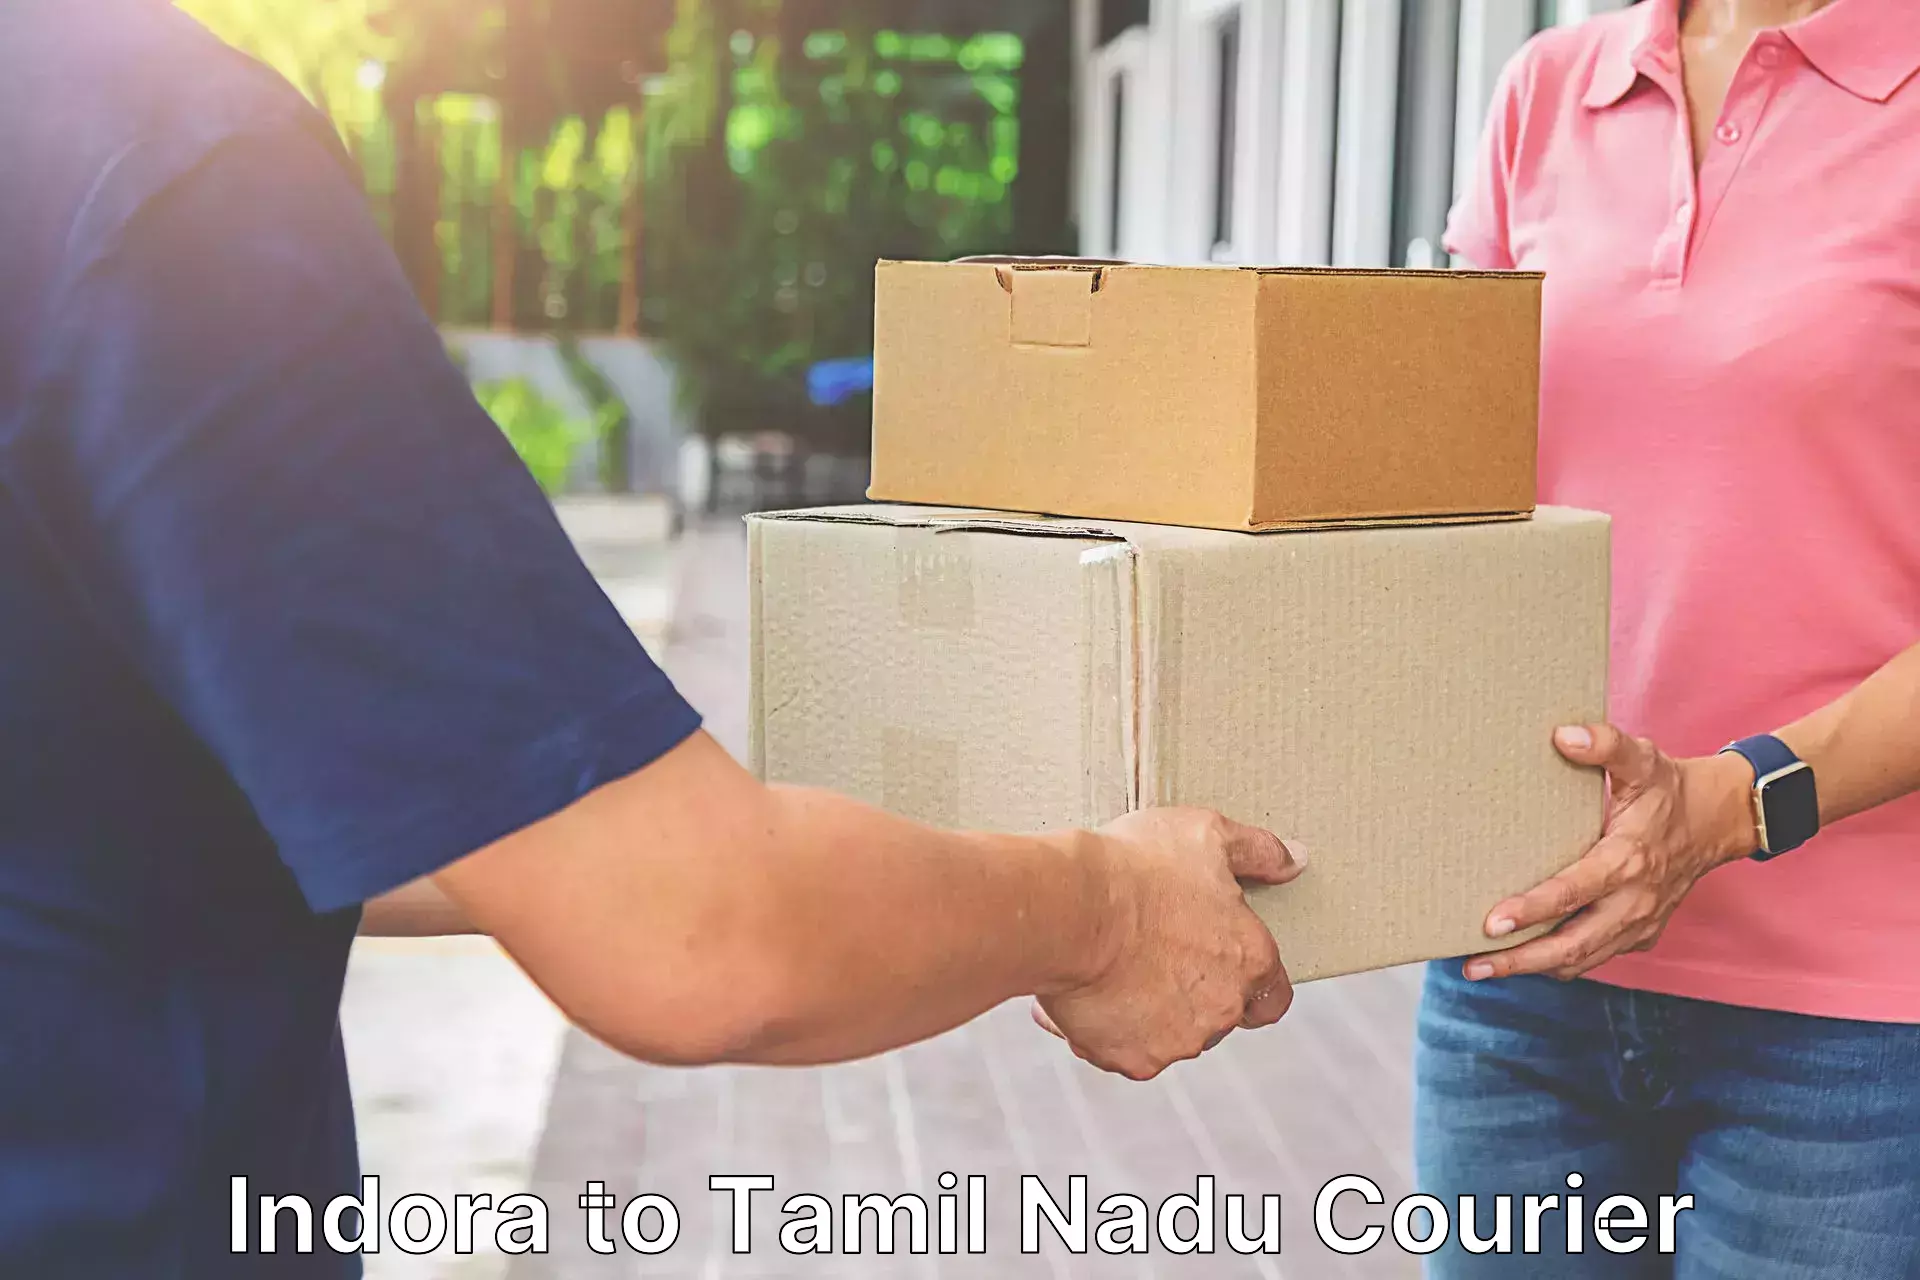 Global courier networks Indora to Thiruvadanai